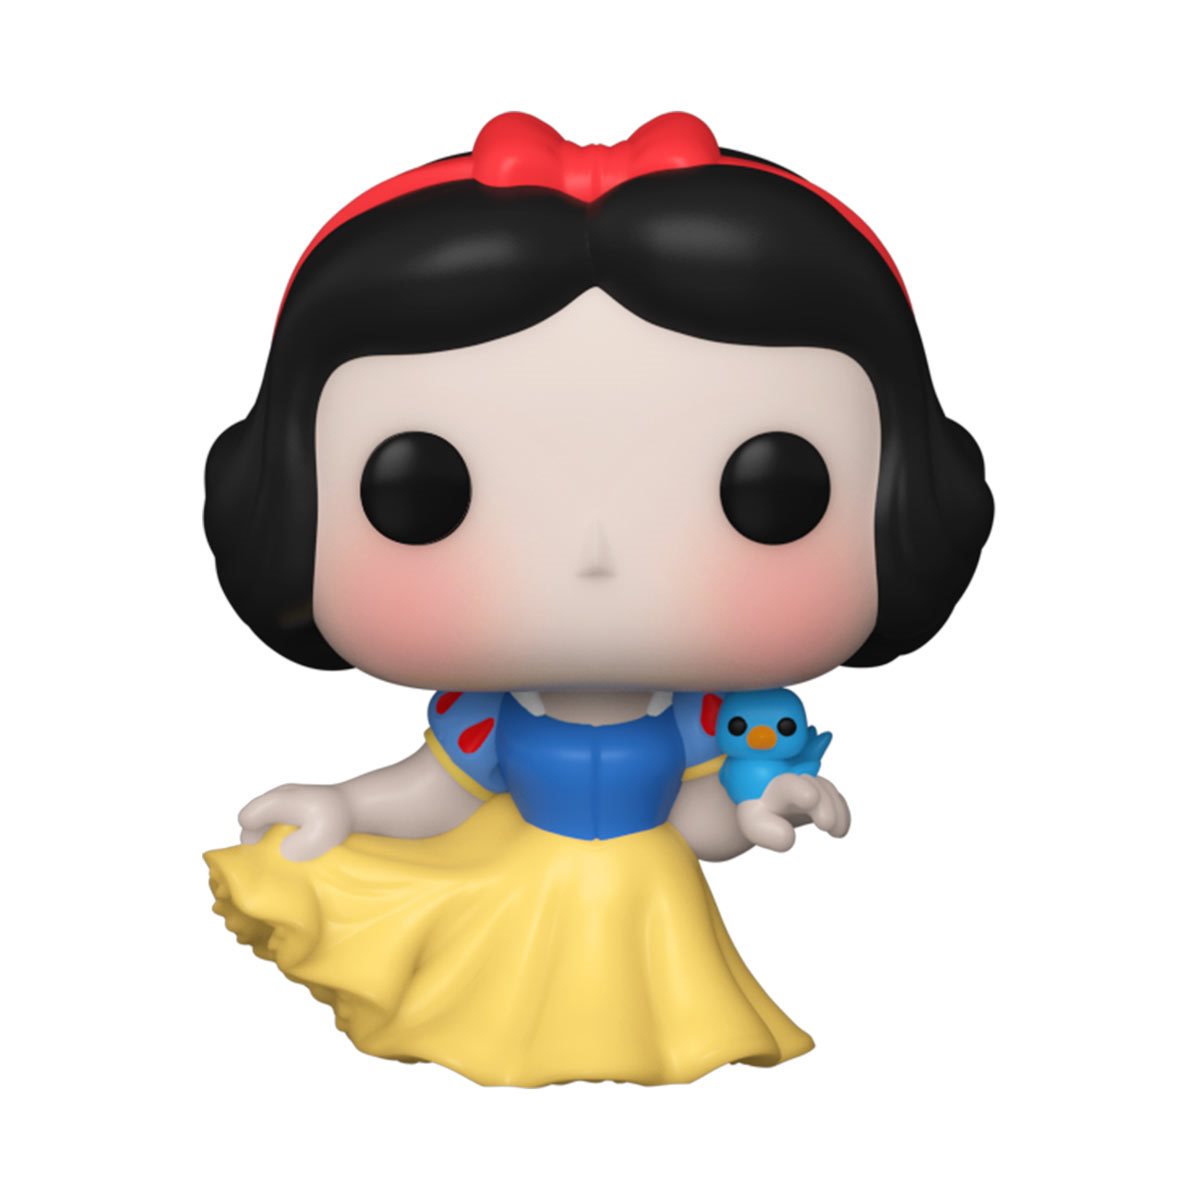 Disney Princess - Belle - Bitty POP! action figure 242